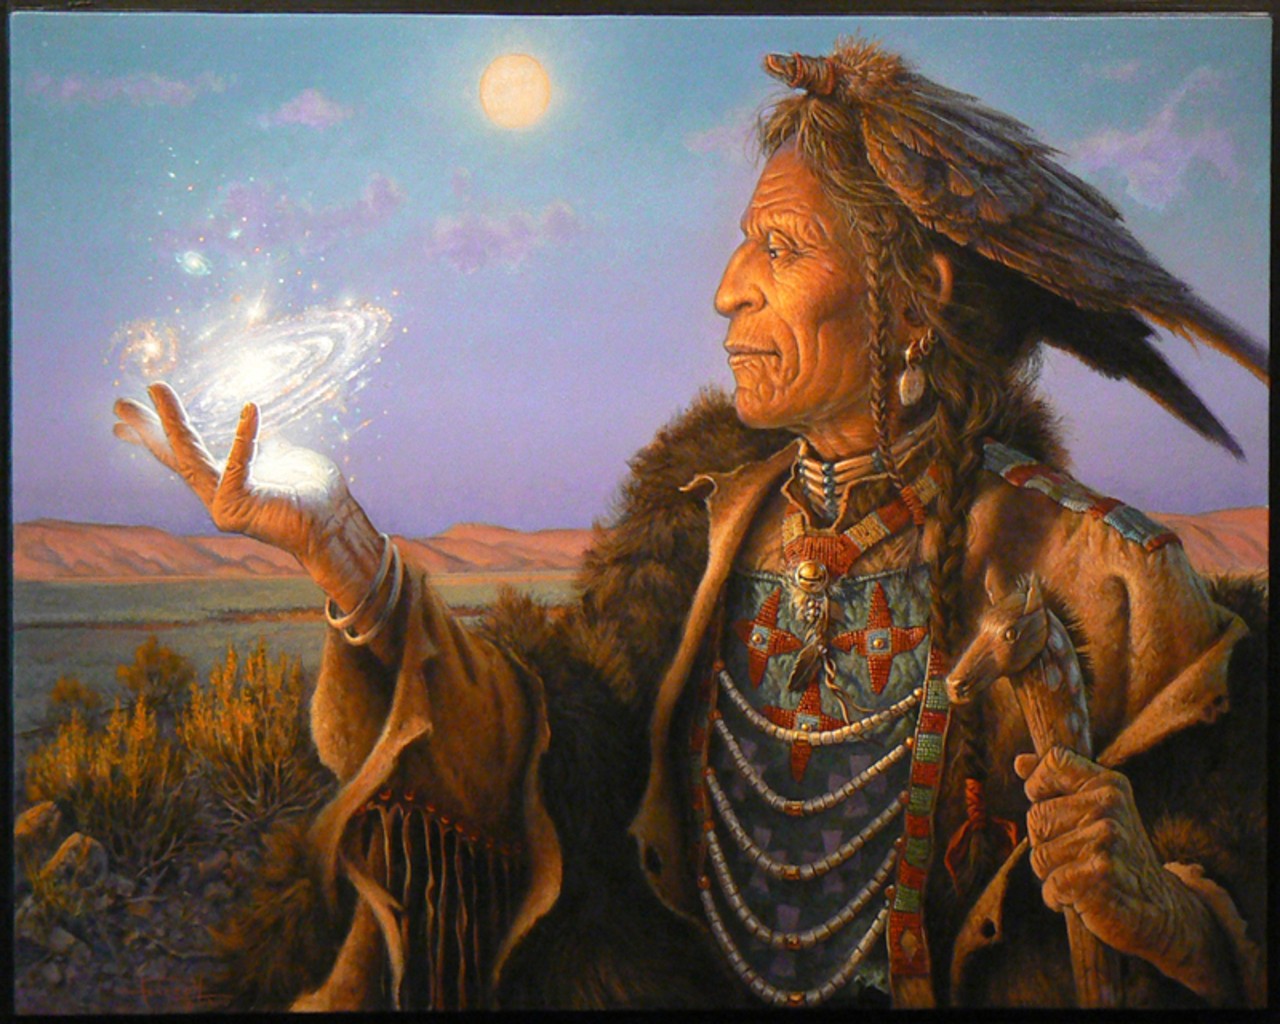 artistic, native american